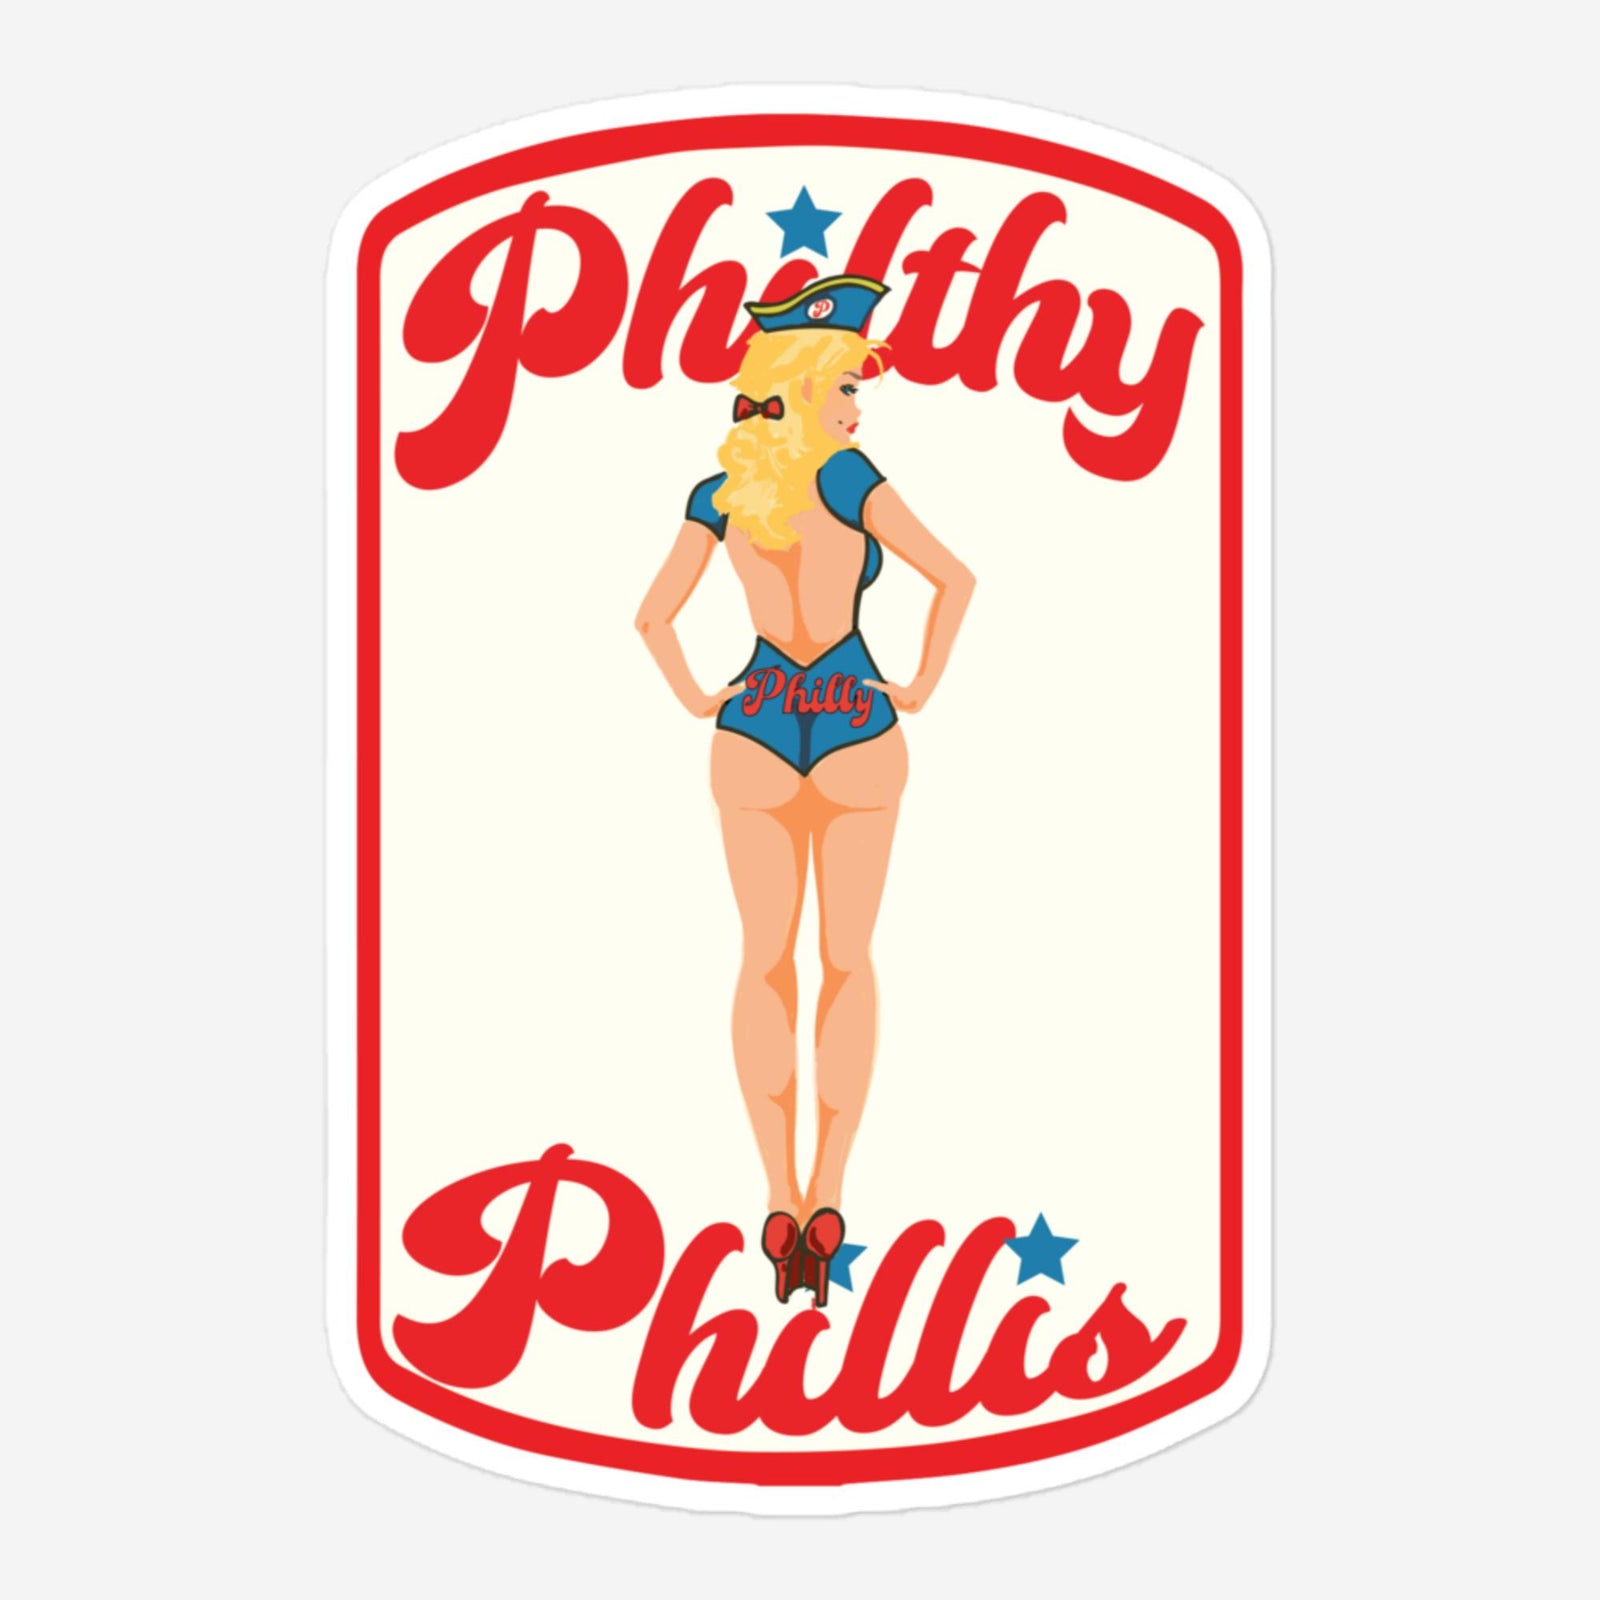 "Philthy Phillis" Sticker